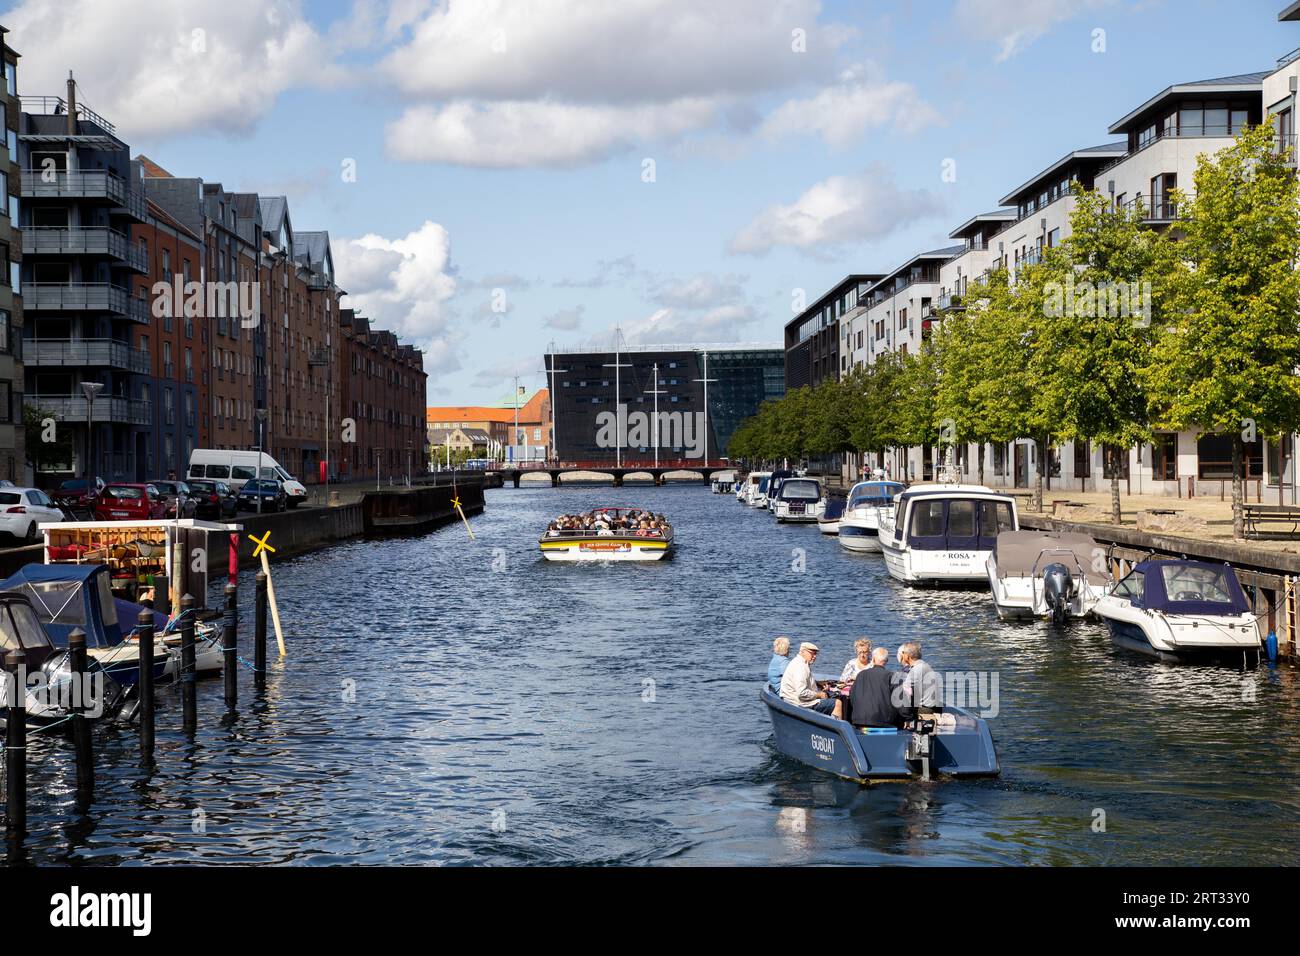 Copenhagen, Denmark, August 21, 2019: Tourist boat in a canal in Christianshavn district Stock Photo